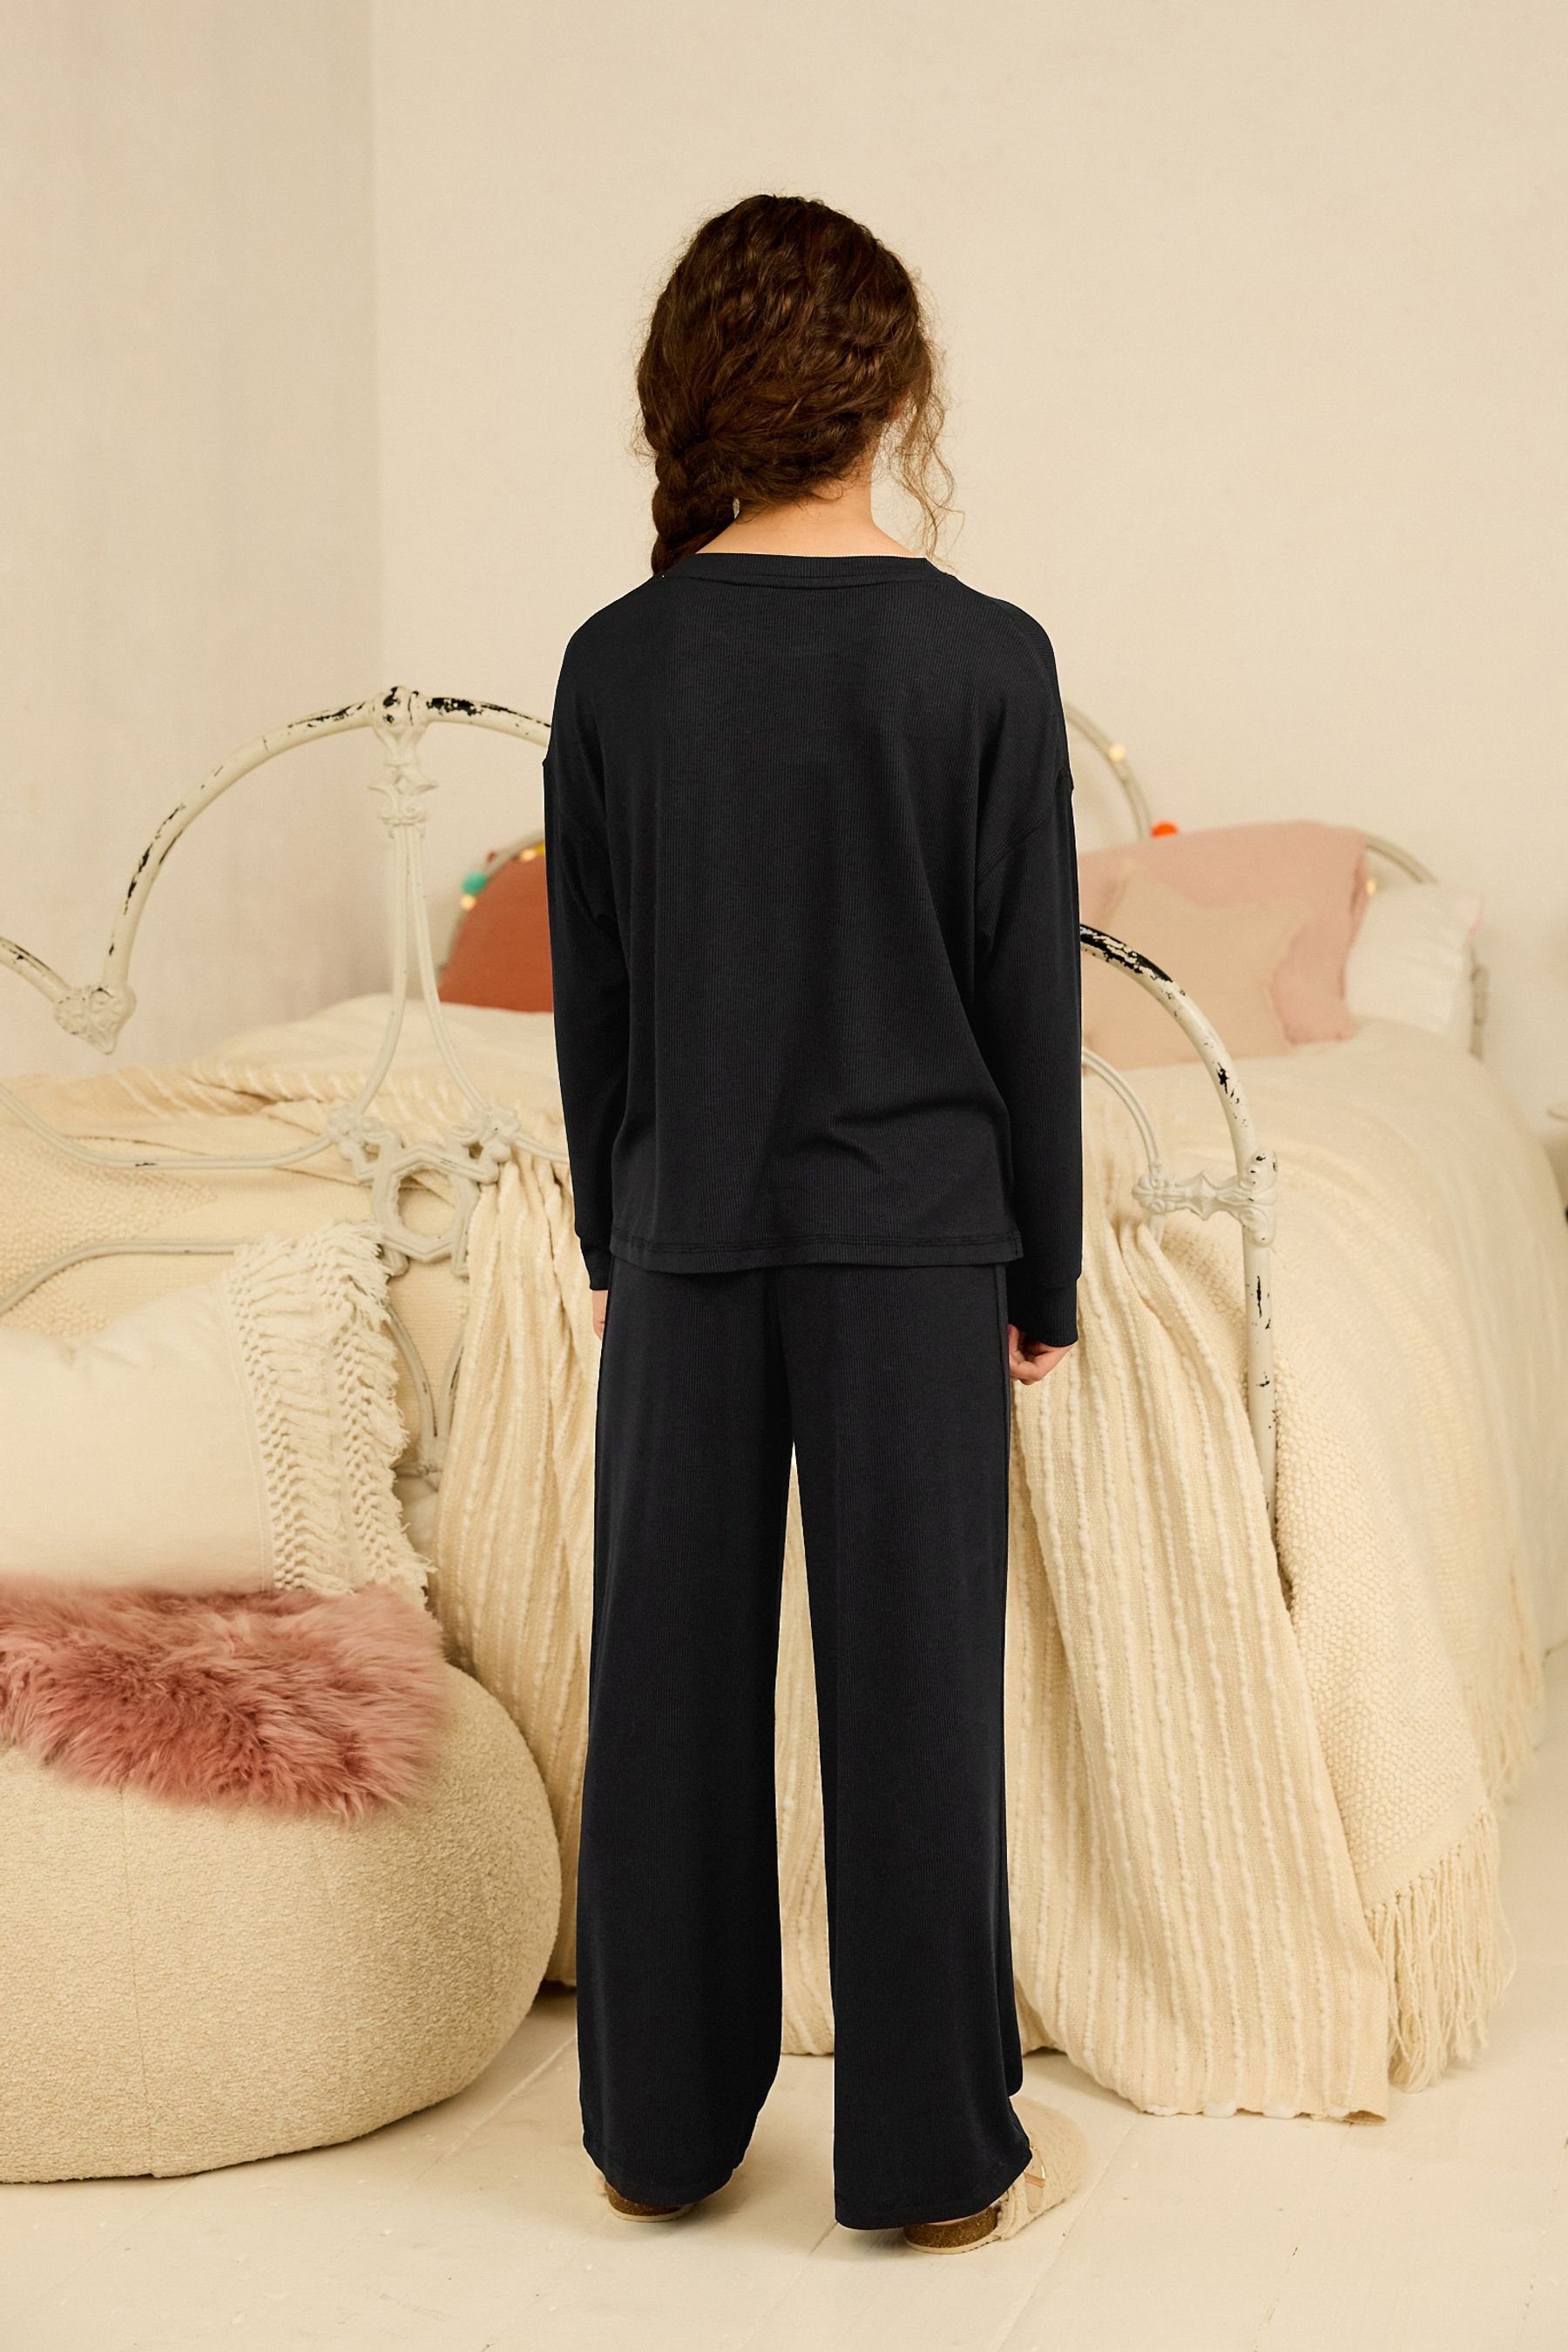 tlg) Gerippter Next Pyjama Bein Black Pyjama (2 mit weitem